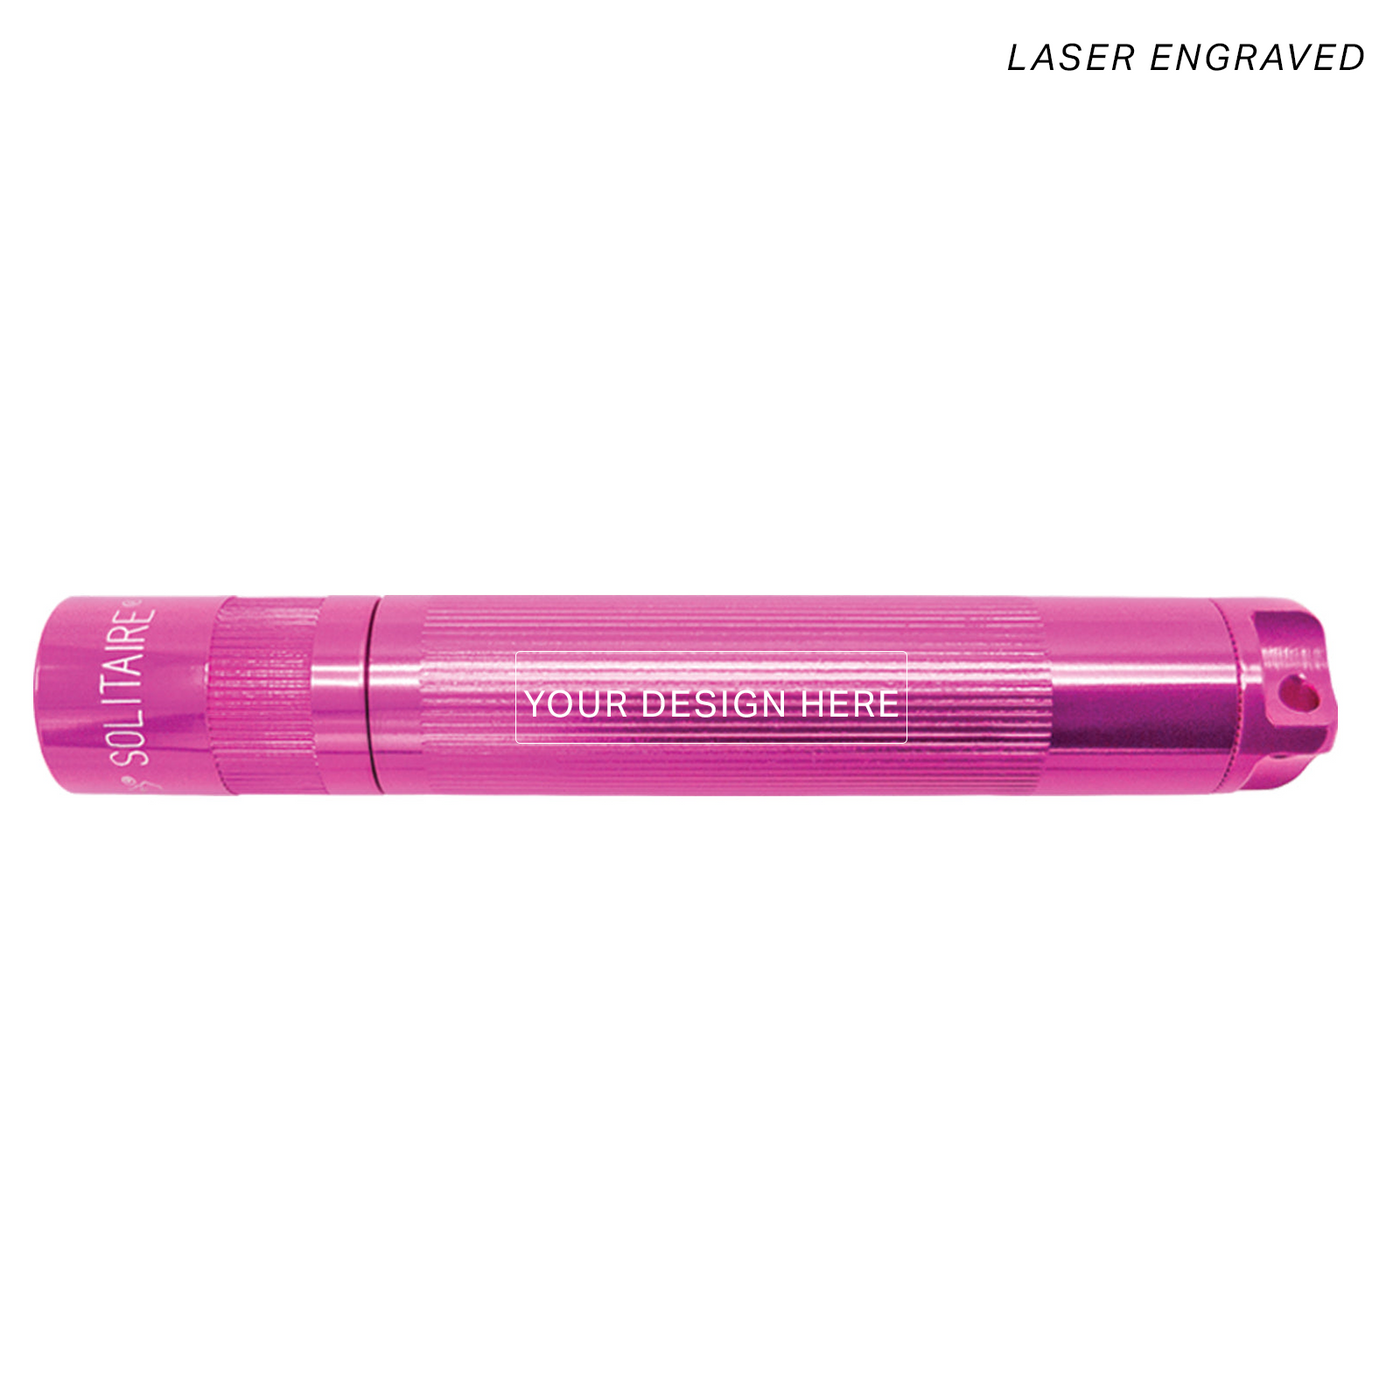 Solitaire LED Key Chain Flashlight - Pink - Custom Engraving